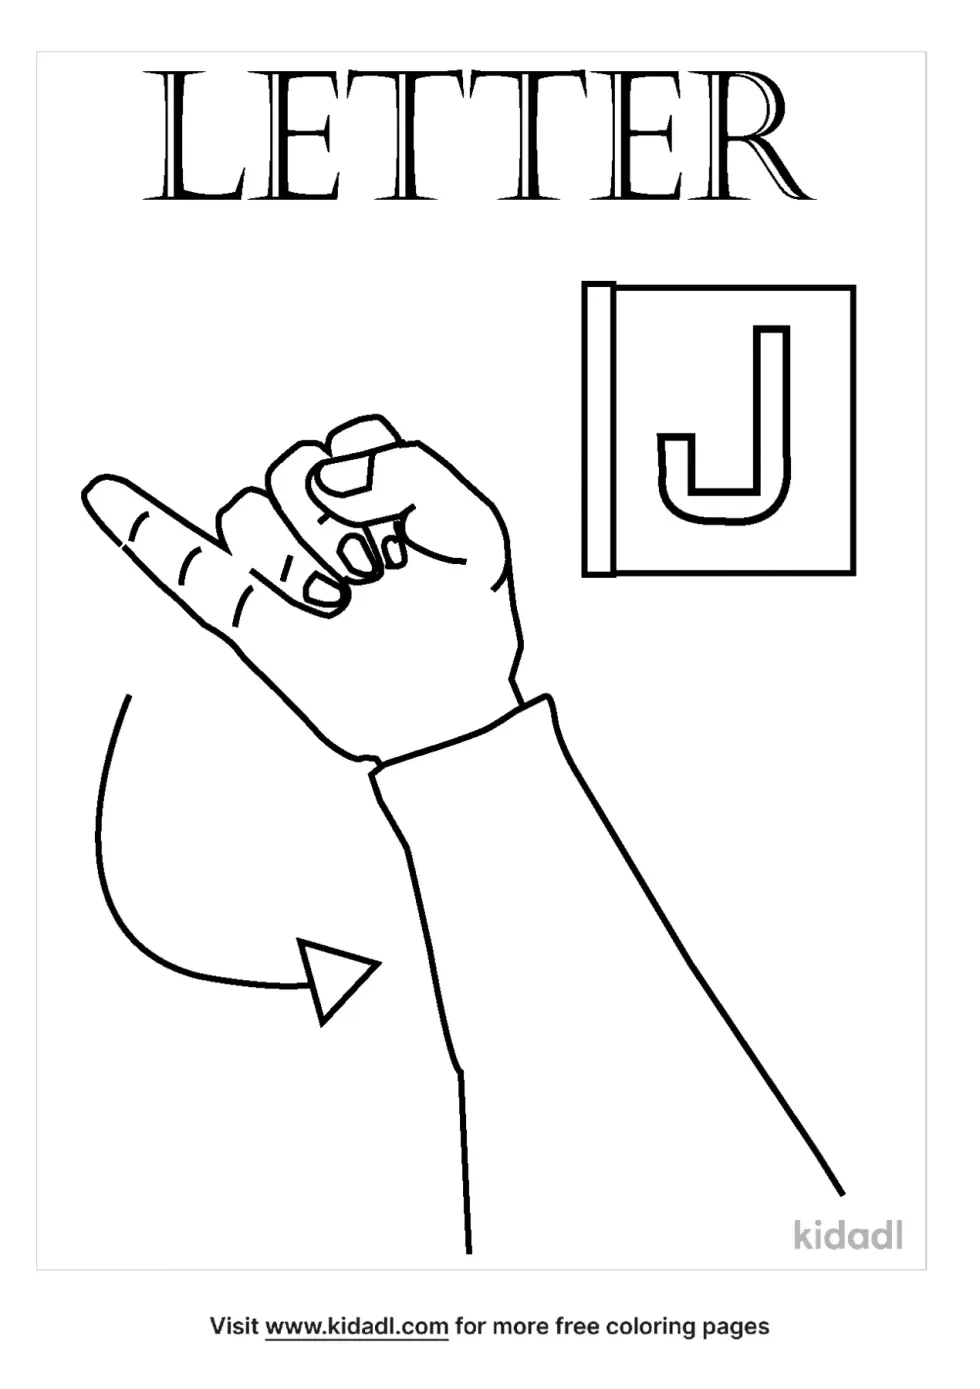 J In Sign Language